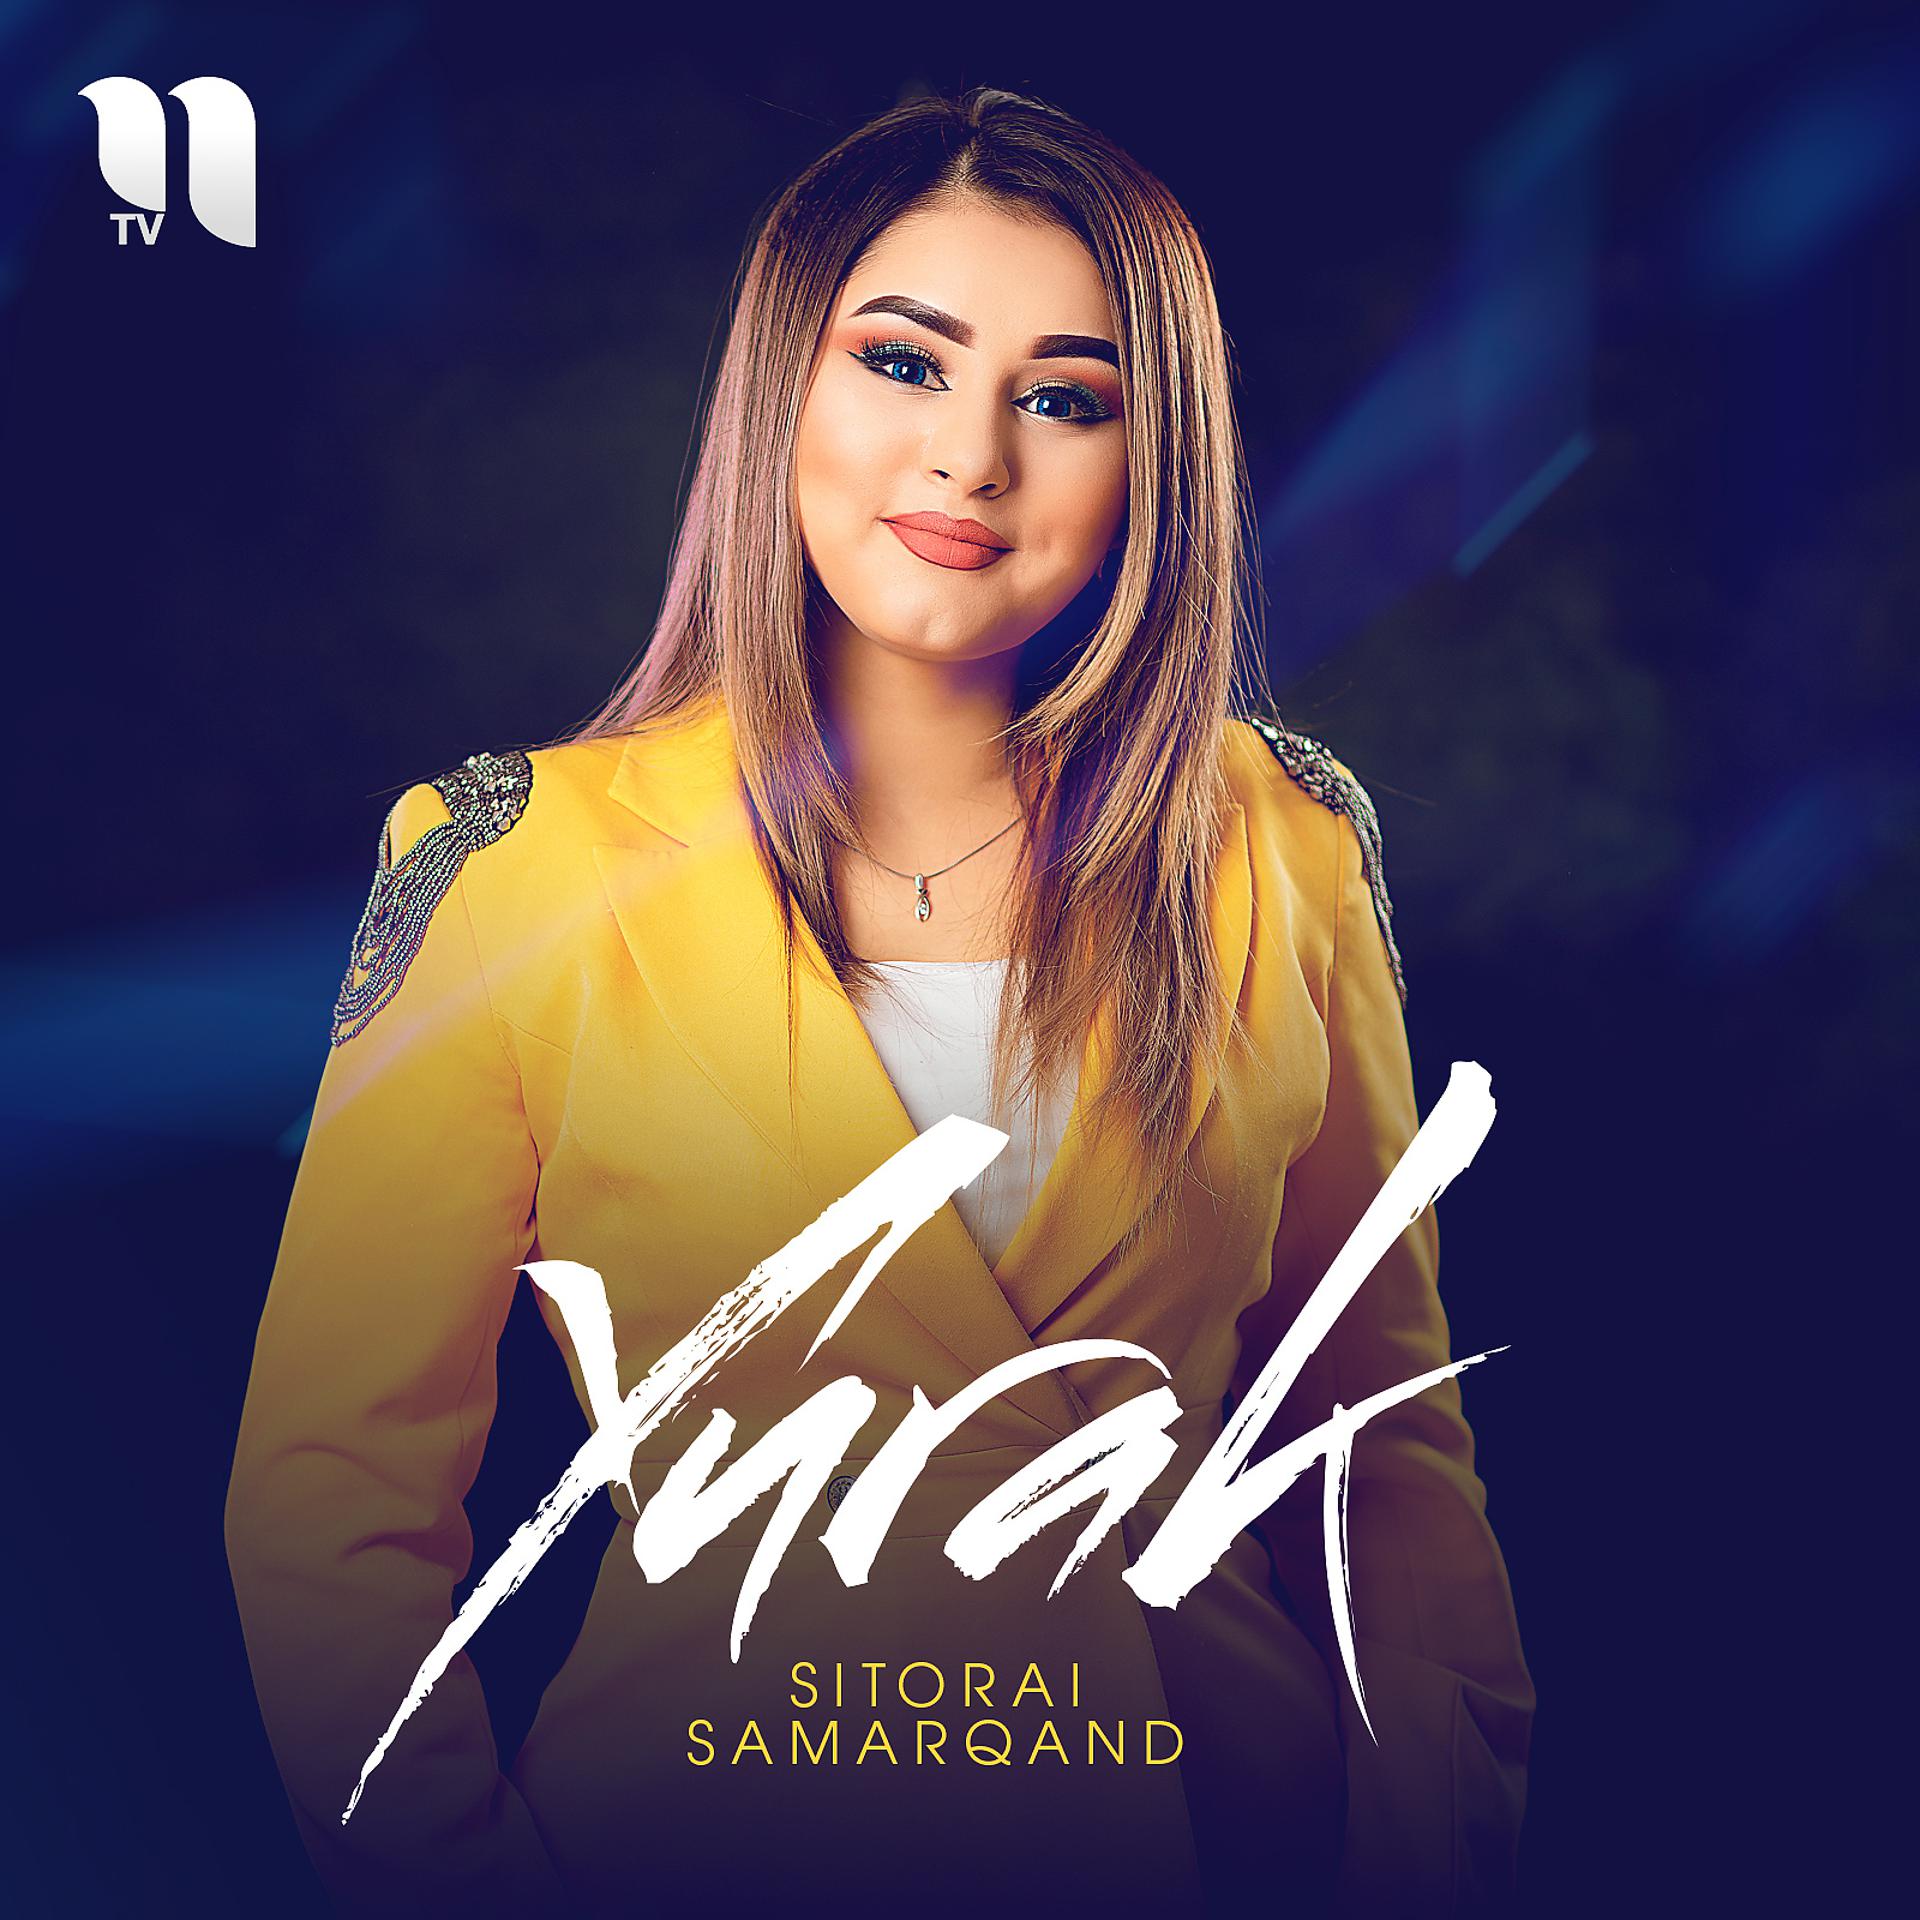 Постер альбома Yurak